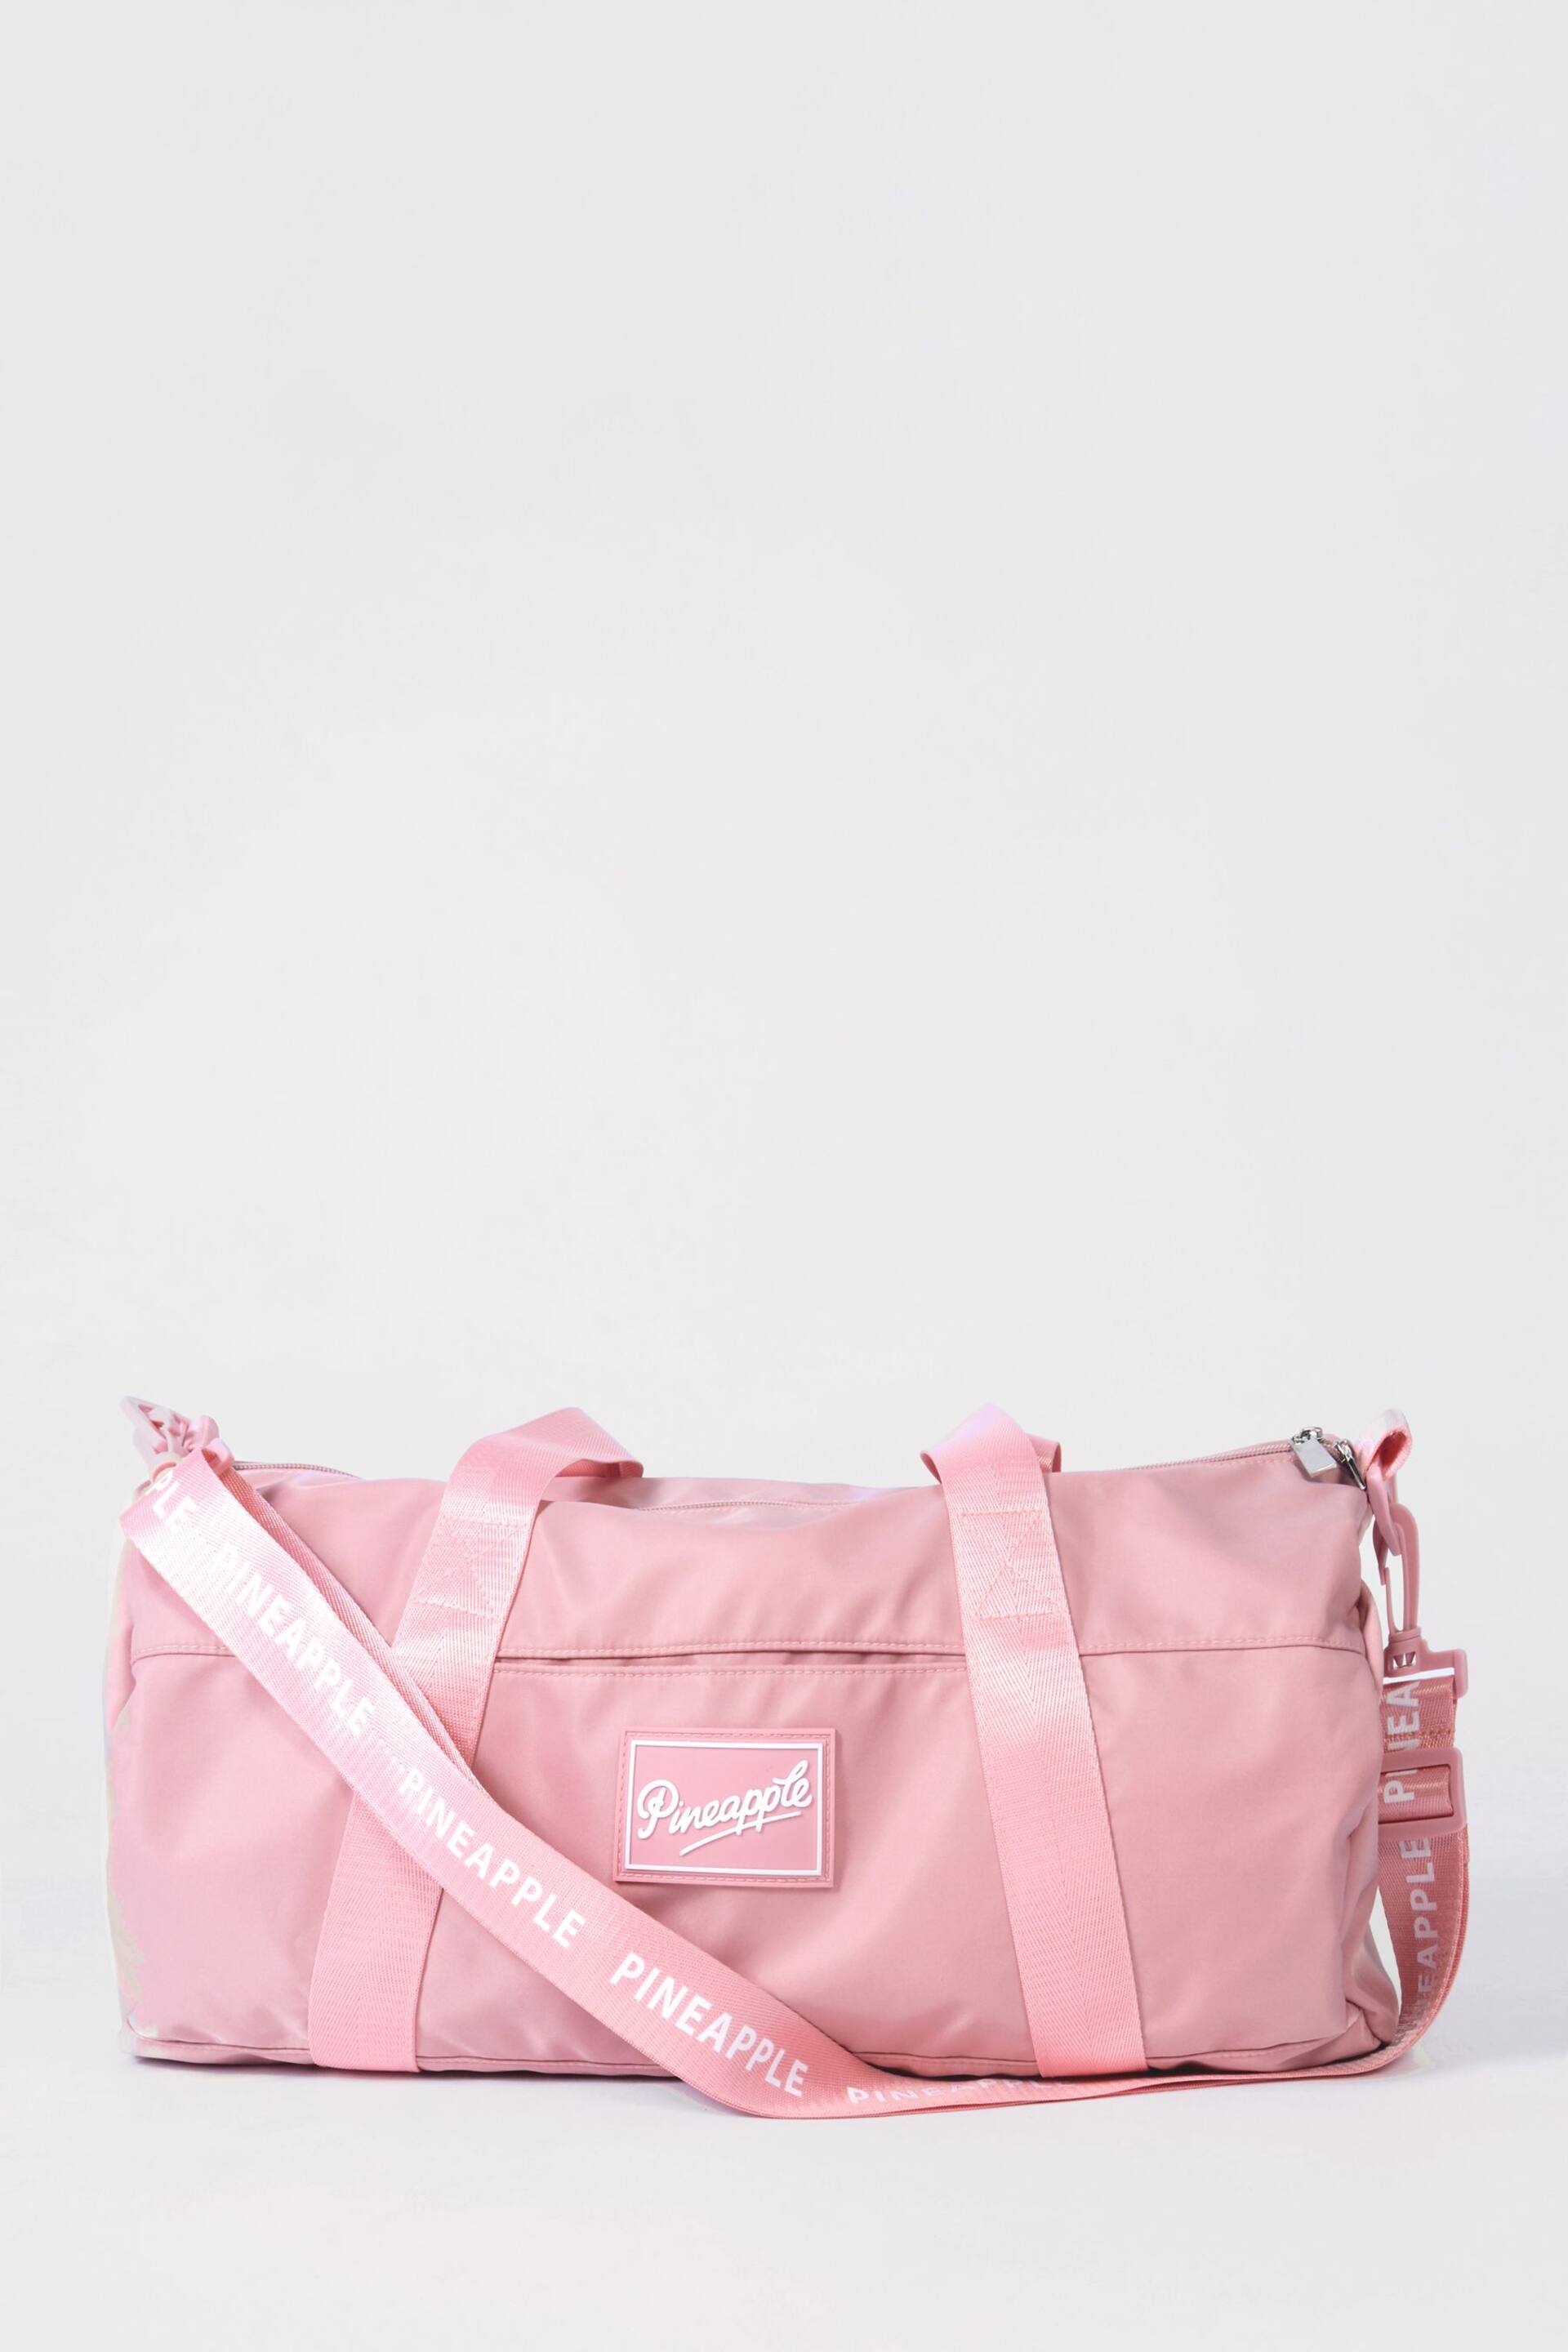 Pineapple Pink Tonal Holdall Kit Bag - Image 1 of 3